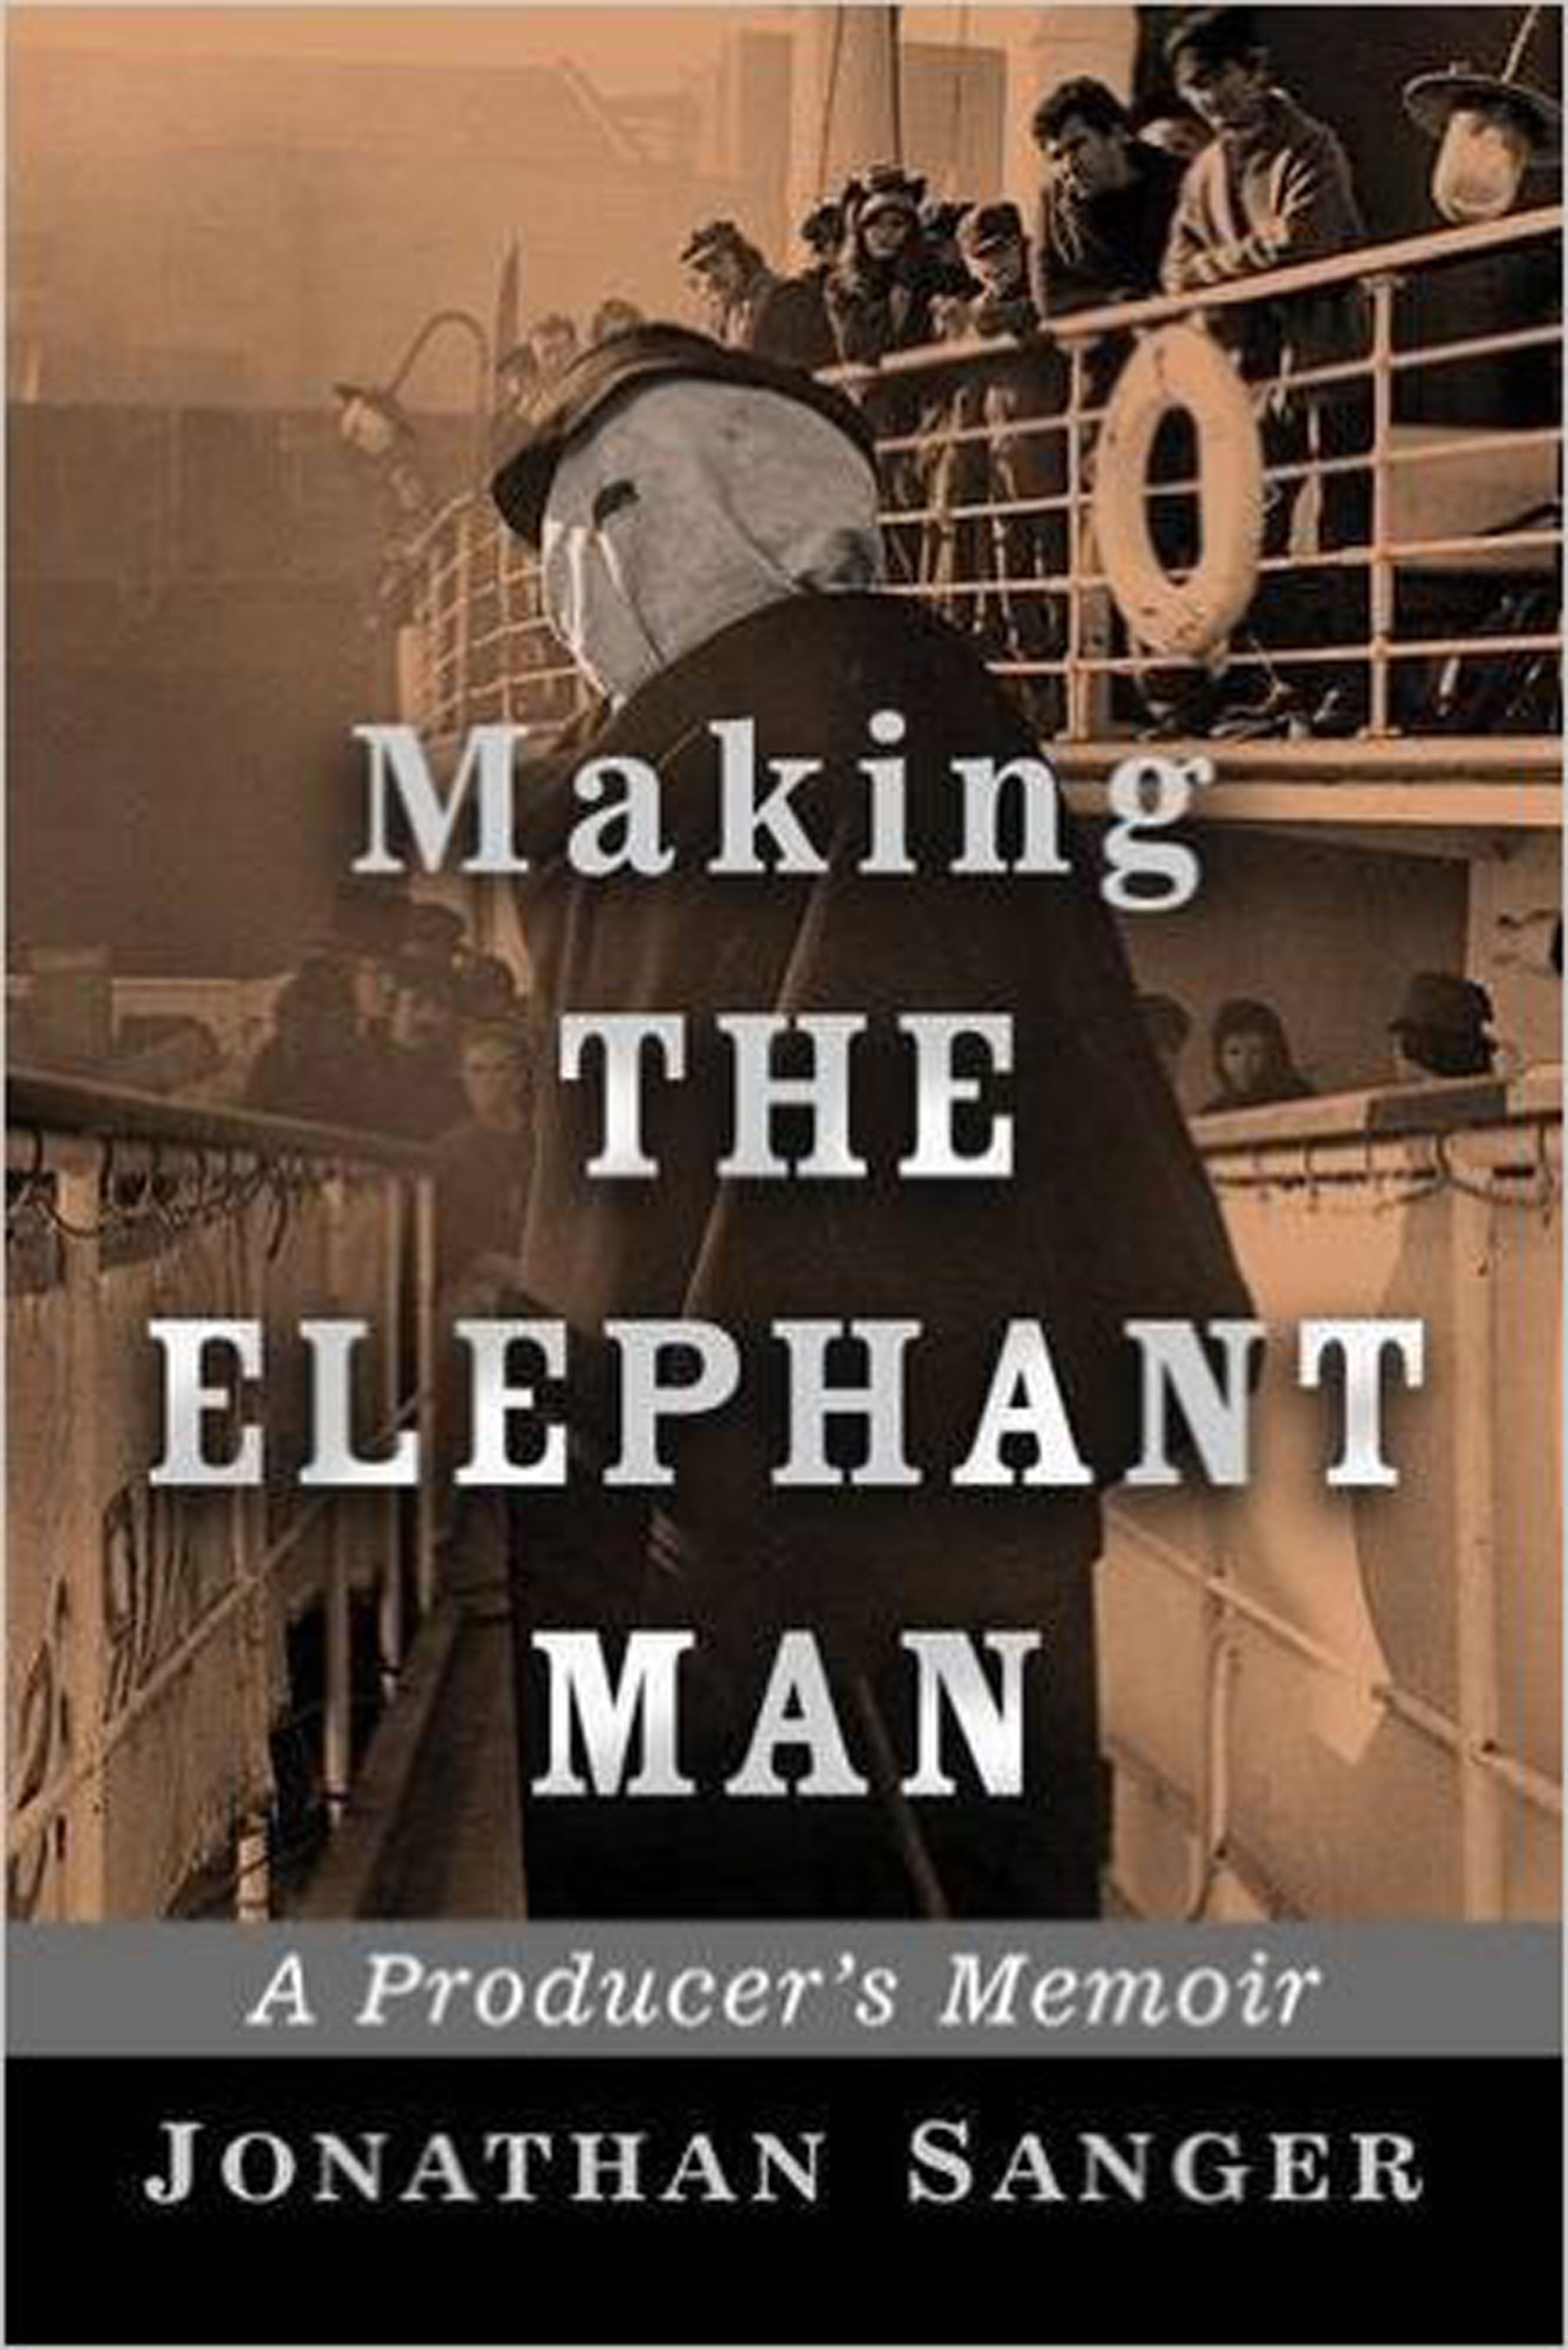 The Elephant Man #9